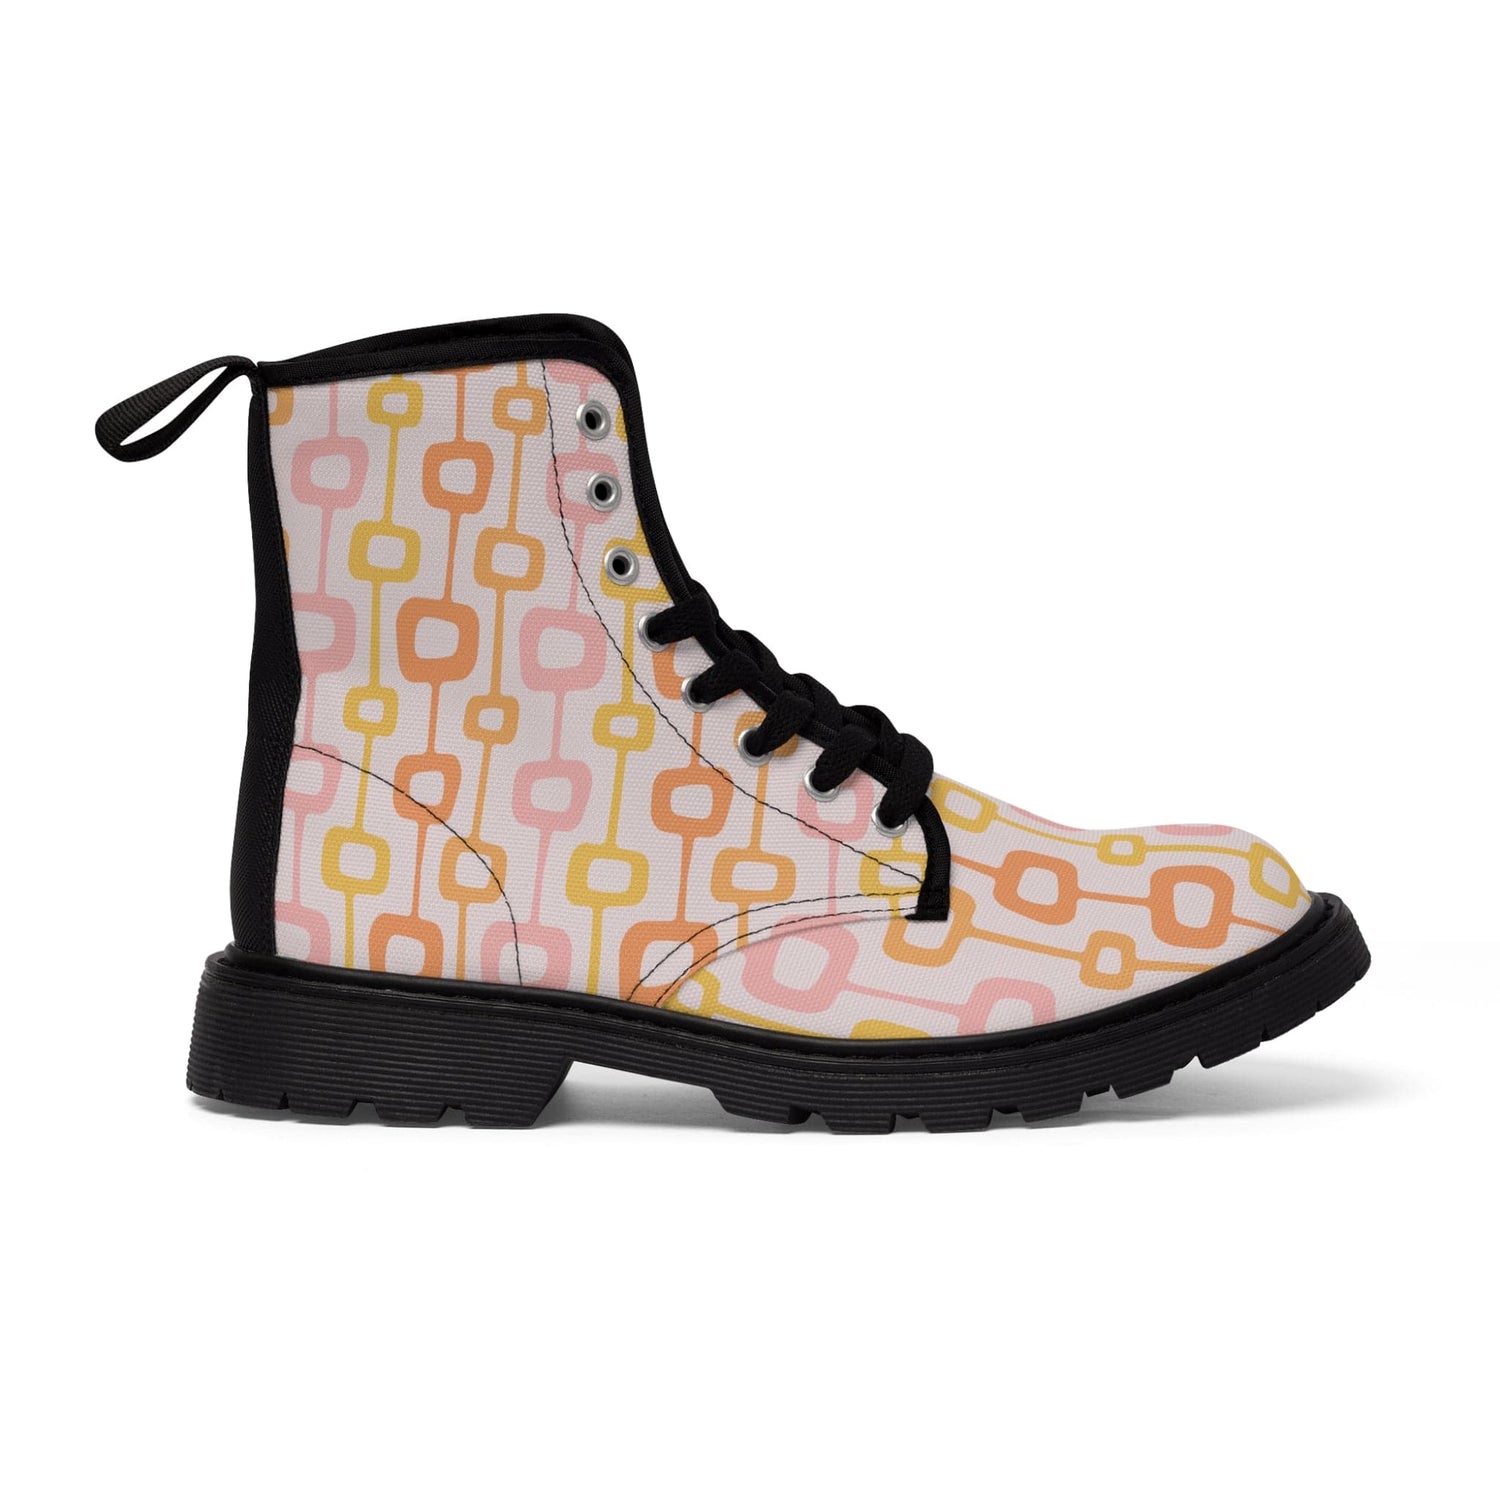 Atomic Cat, Mid Century Modern, Geometric, Pink, Orange, Retro Apparel, Fall Boots, Funky Fun Designs By Mid Century Modern Gal Shoes